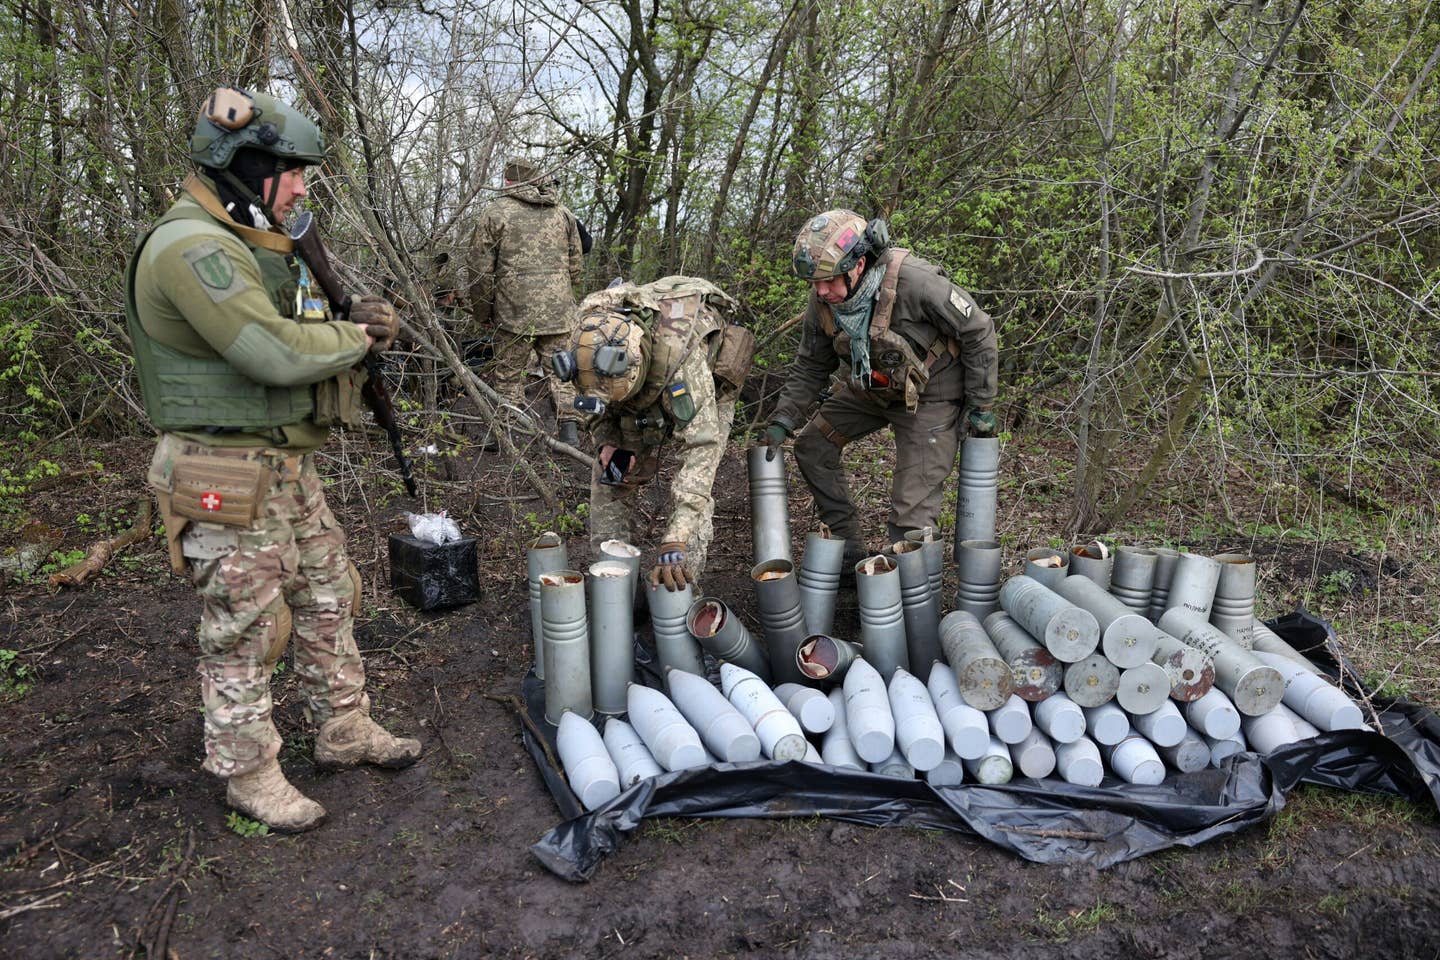 Ukrainian artillerymen of the Aidar battalion work with artillery shells on a front line position near Bakhmut, Donetsk region, on April 22, 2023. (Photo by Anatolii STEPANOV / AFP) (Photo by ANATOLII STEPANOV/AFP via Getty Images)